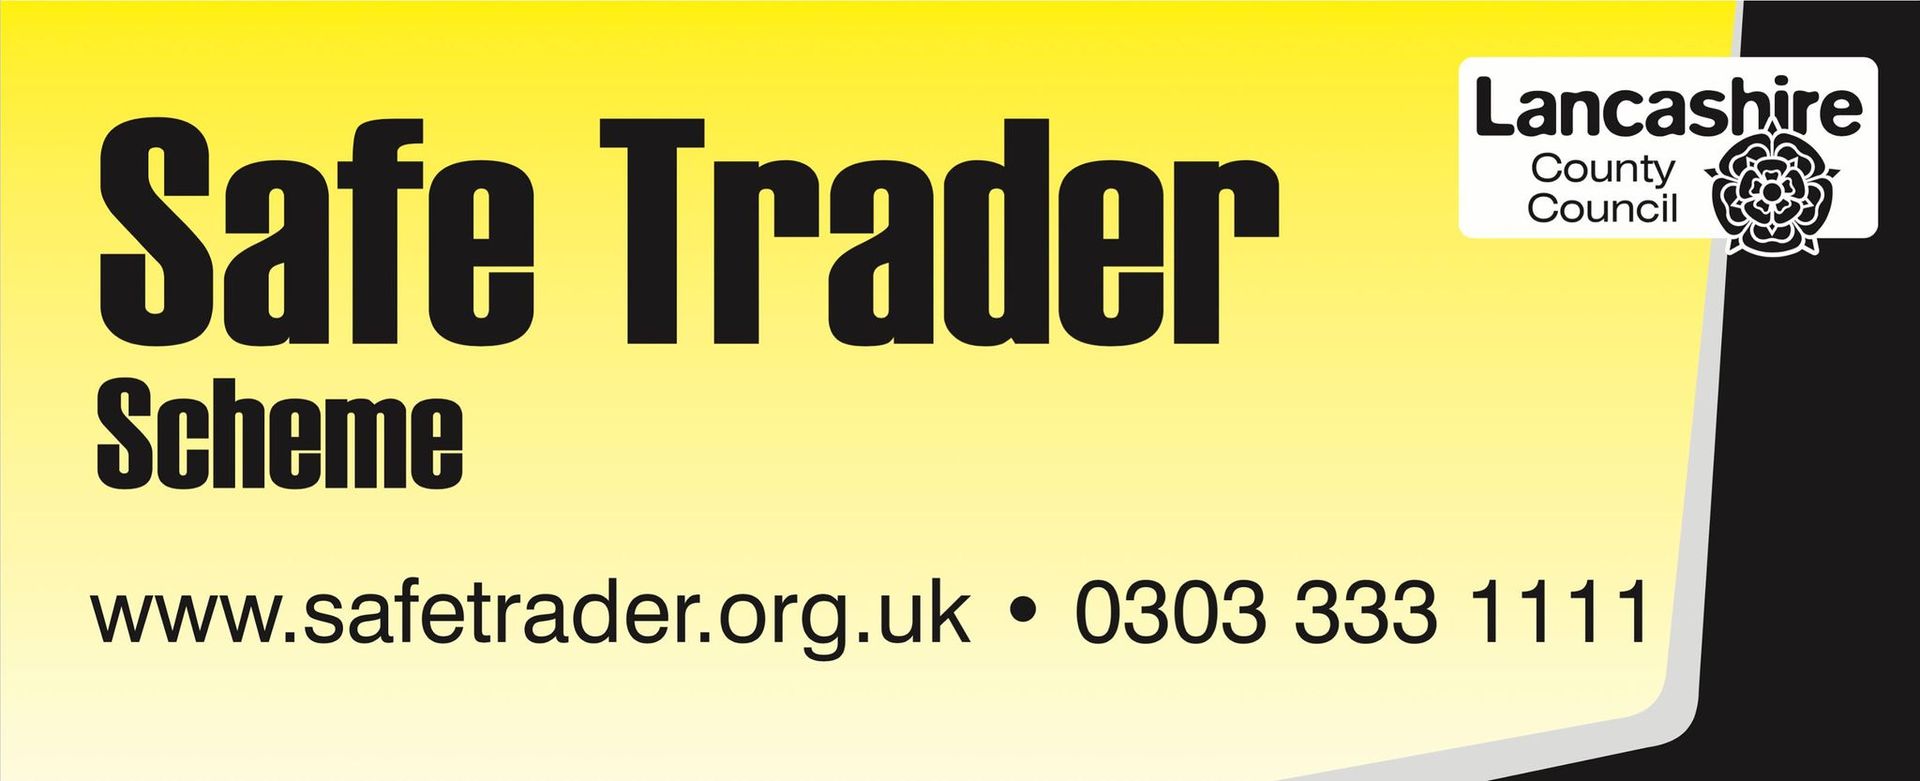 Lancashire House Clearances safe trader scheme member